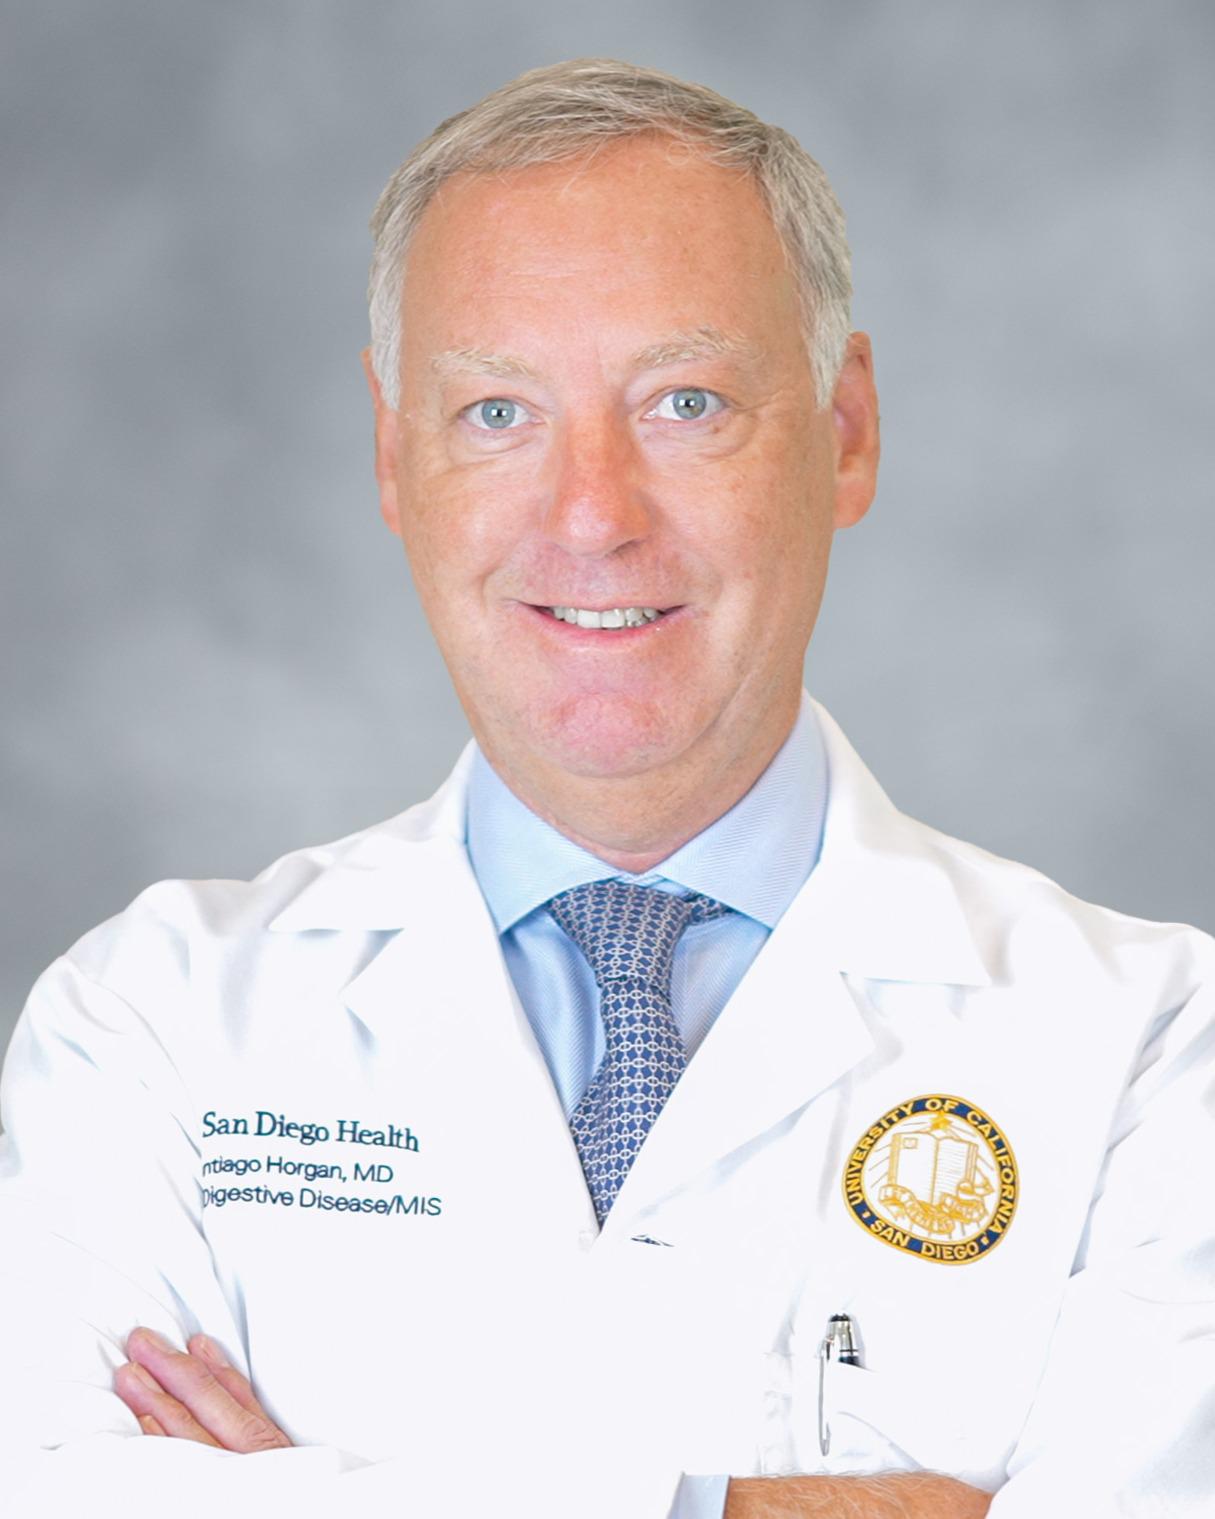 Dr. Santiago Horgan, MD